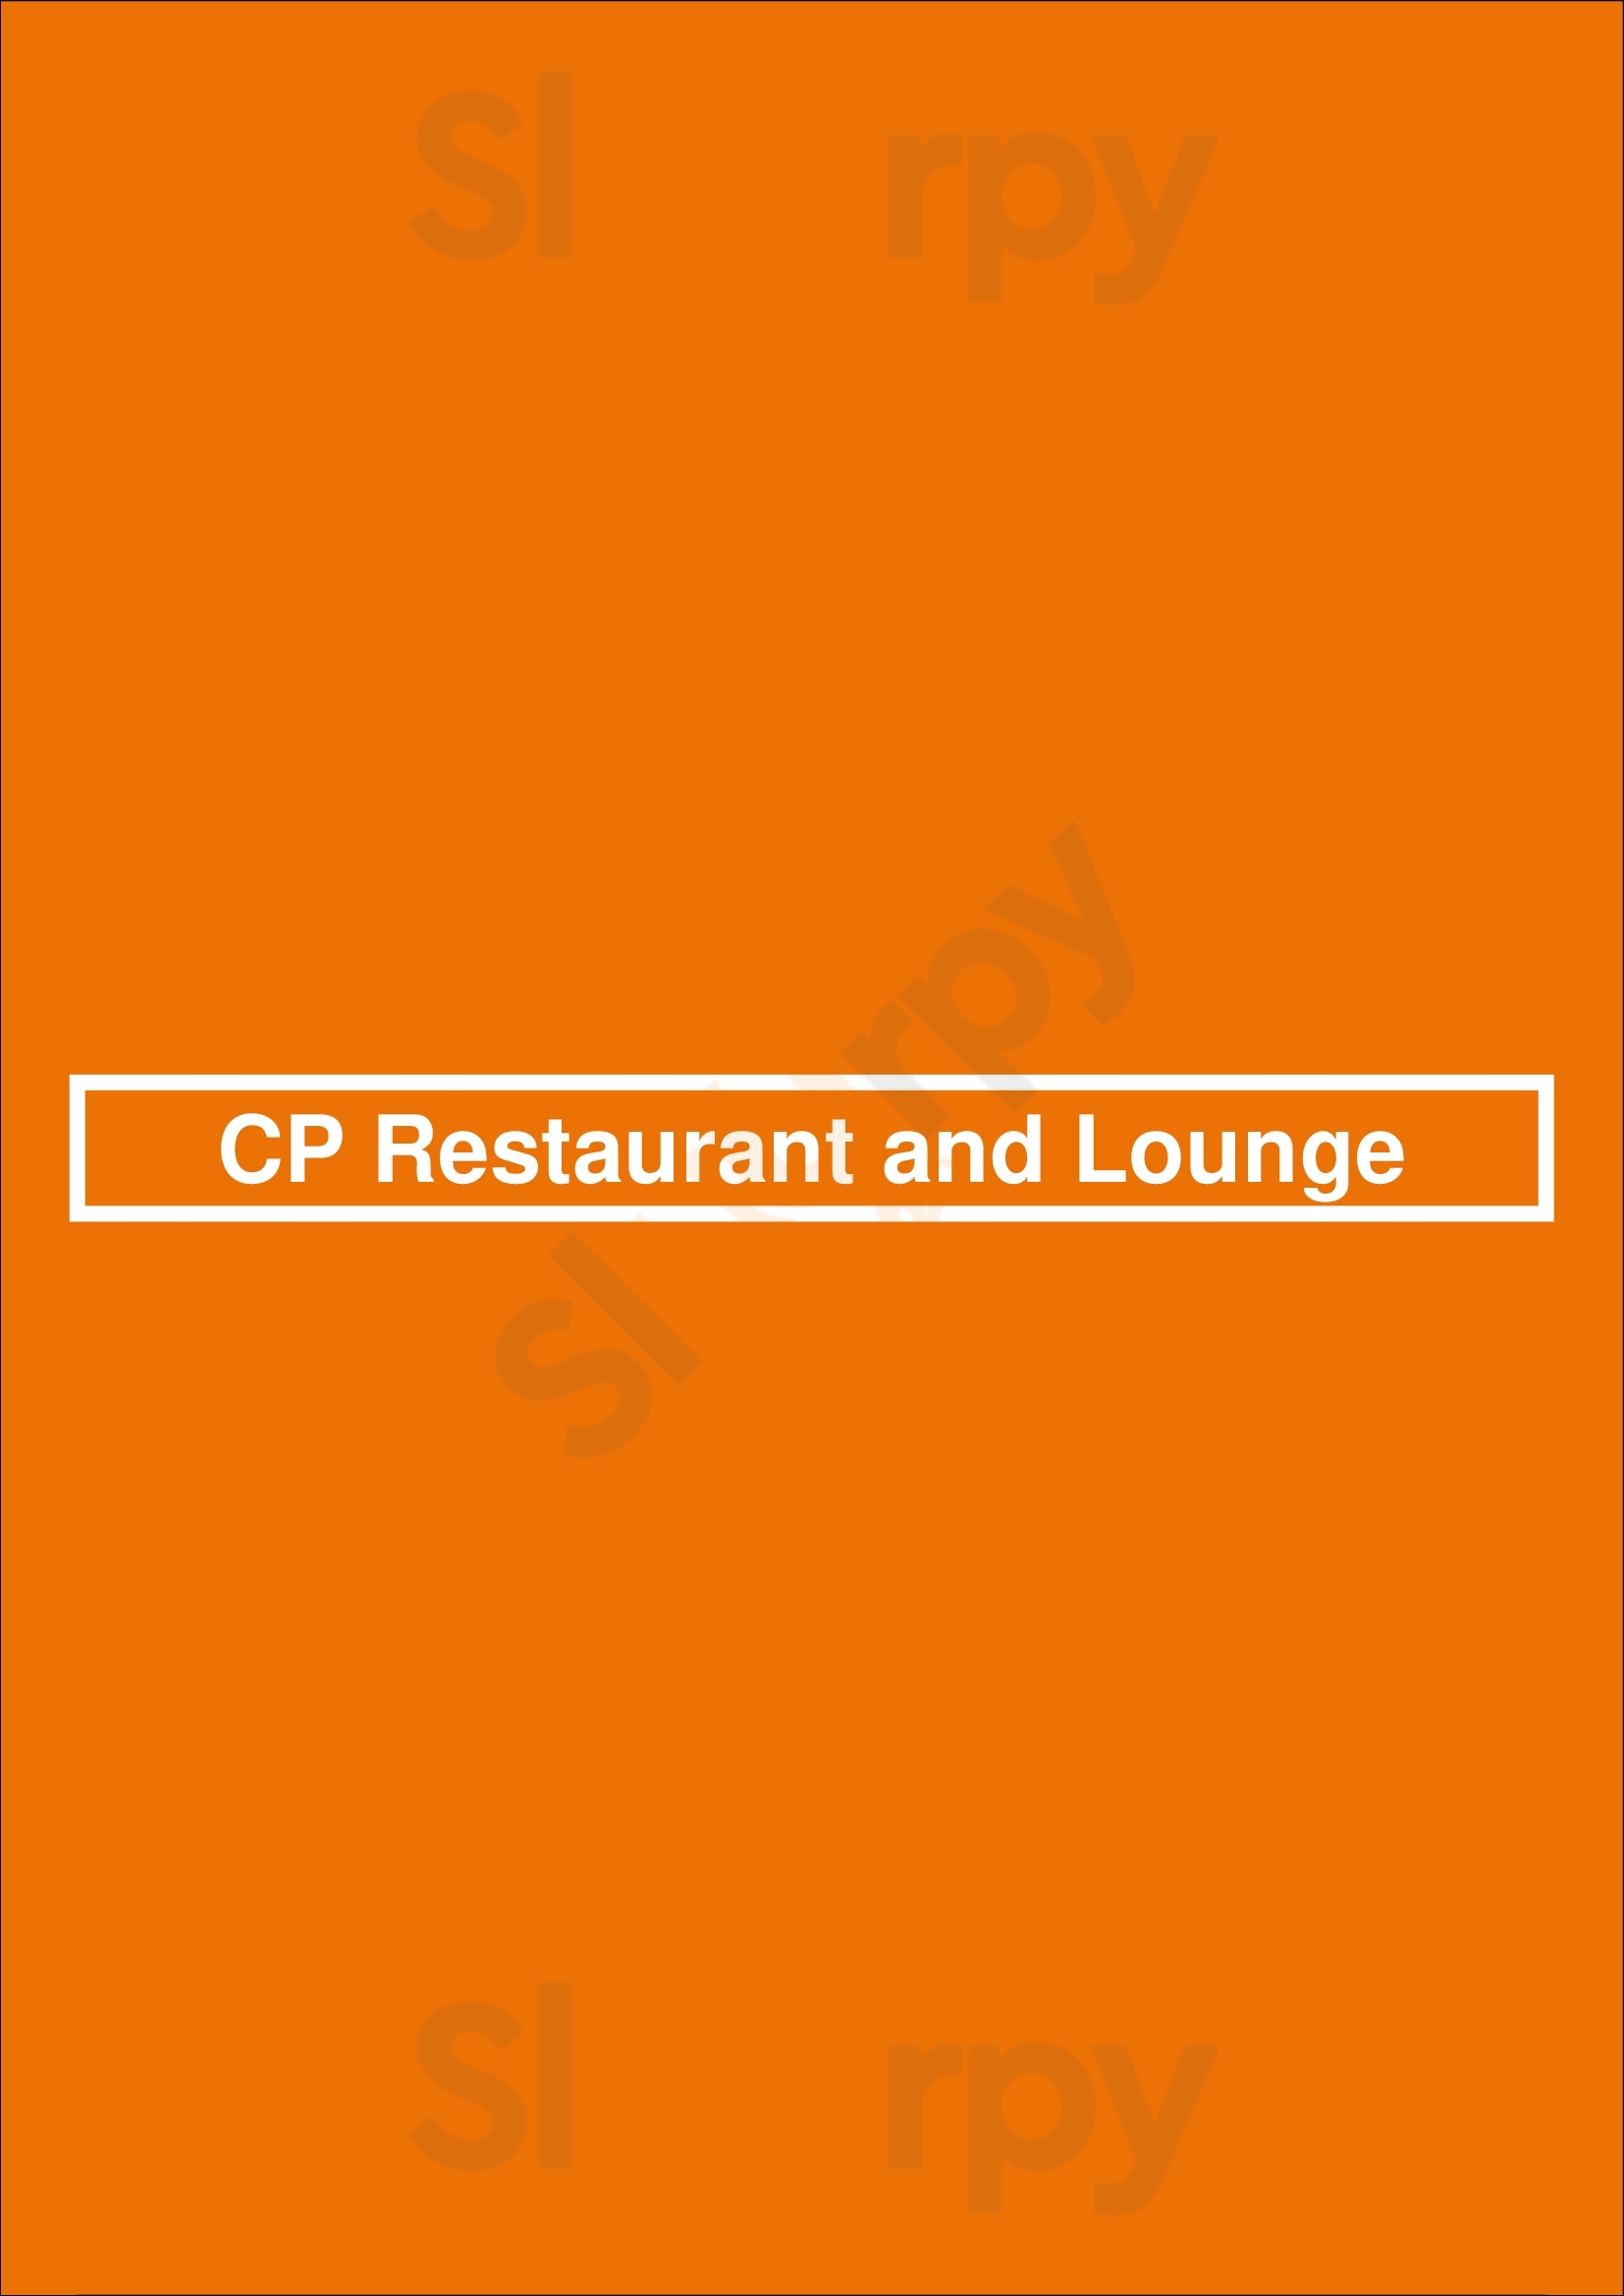 Cp Restaurant And Lounge Newport Beach Menu - 1